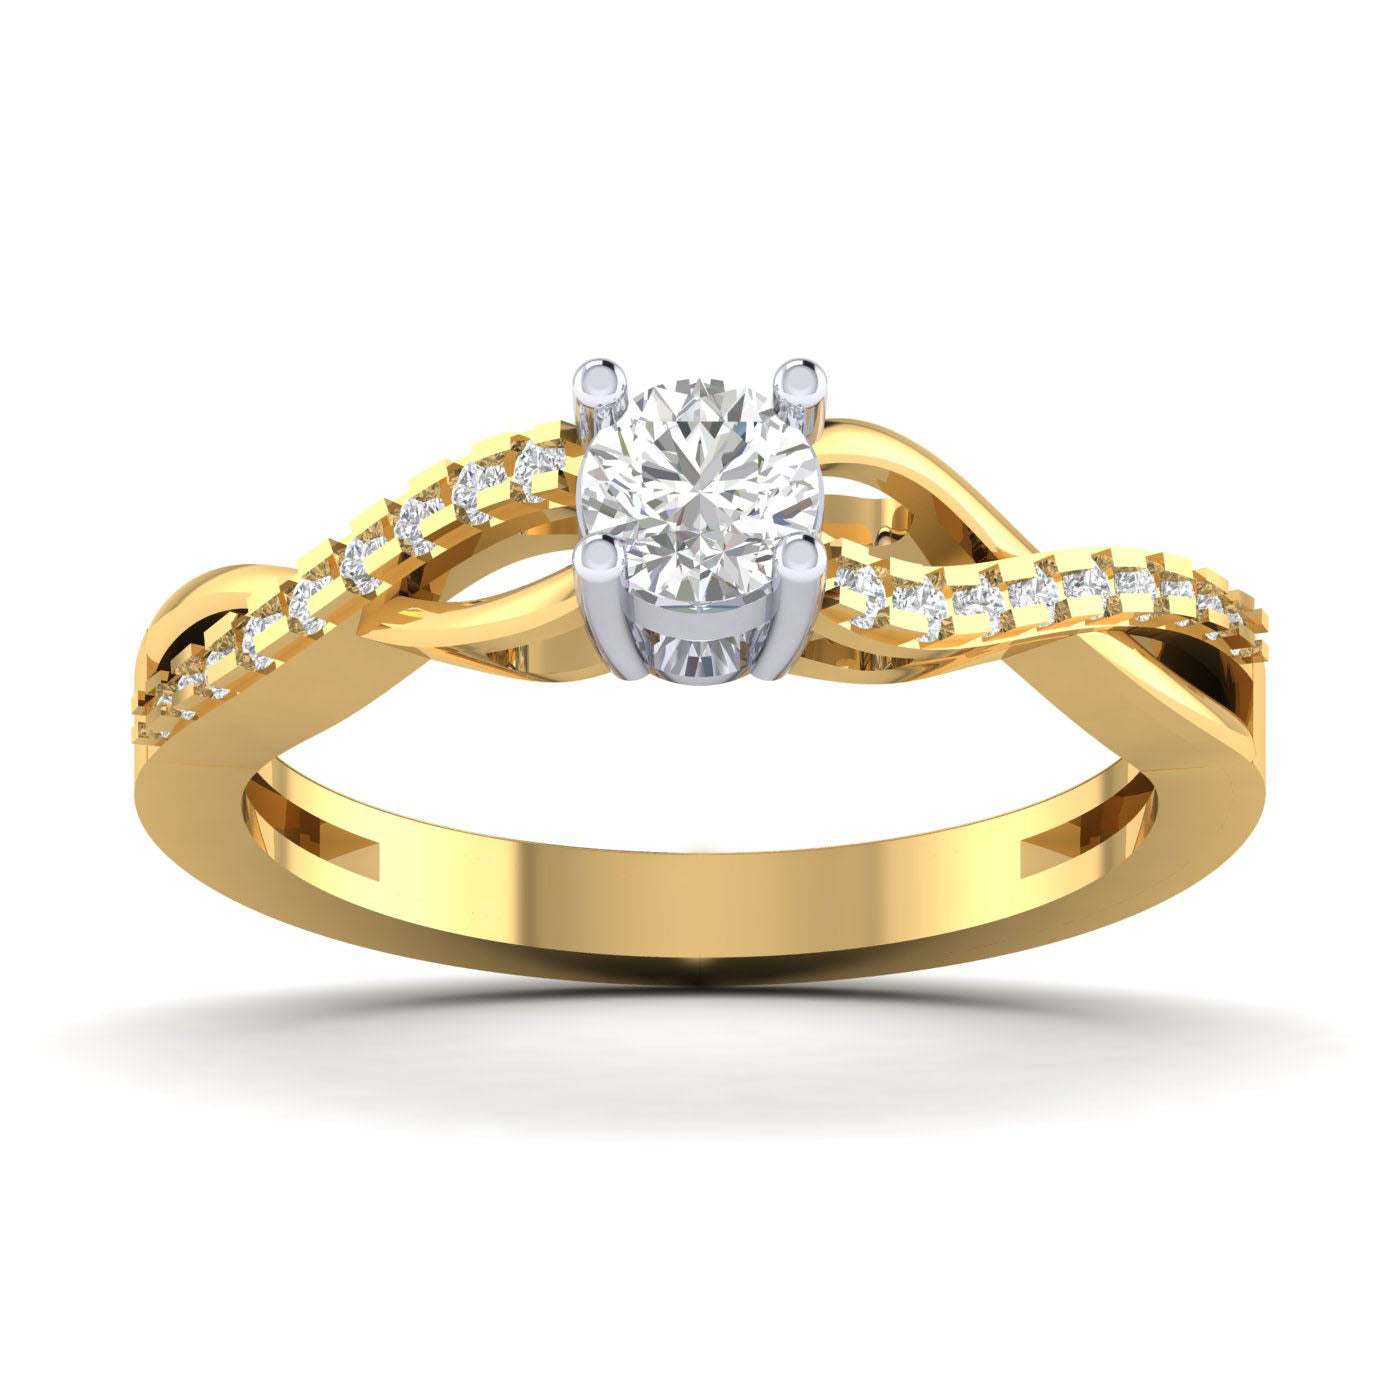 VineLace Sparkle Diamond Ring